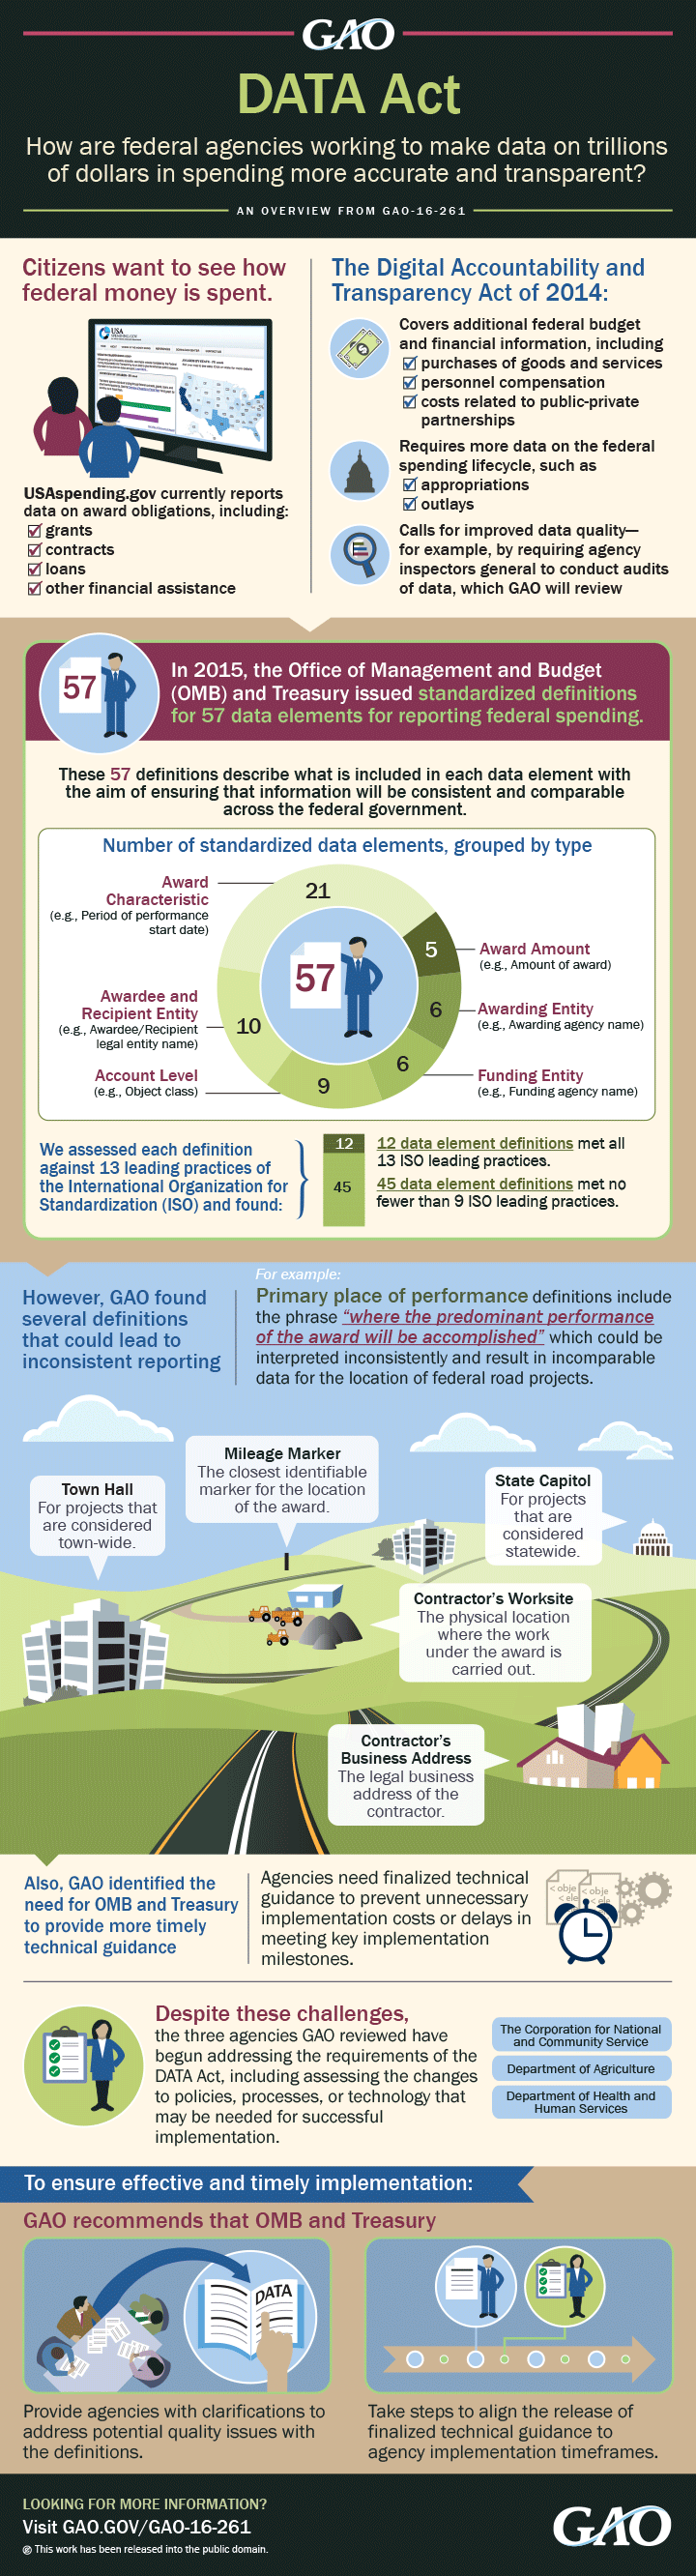 GAO-16-261: 2015 DATA Act Infographic